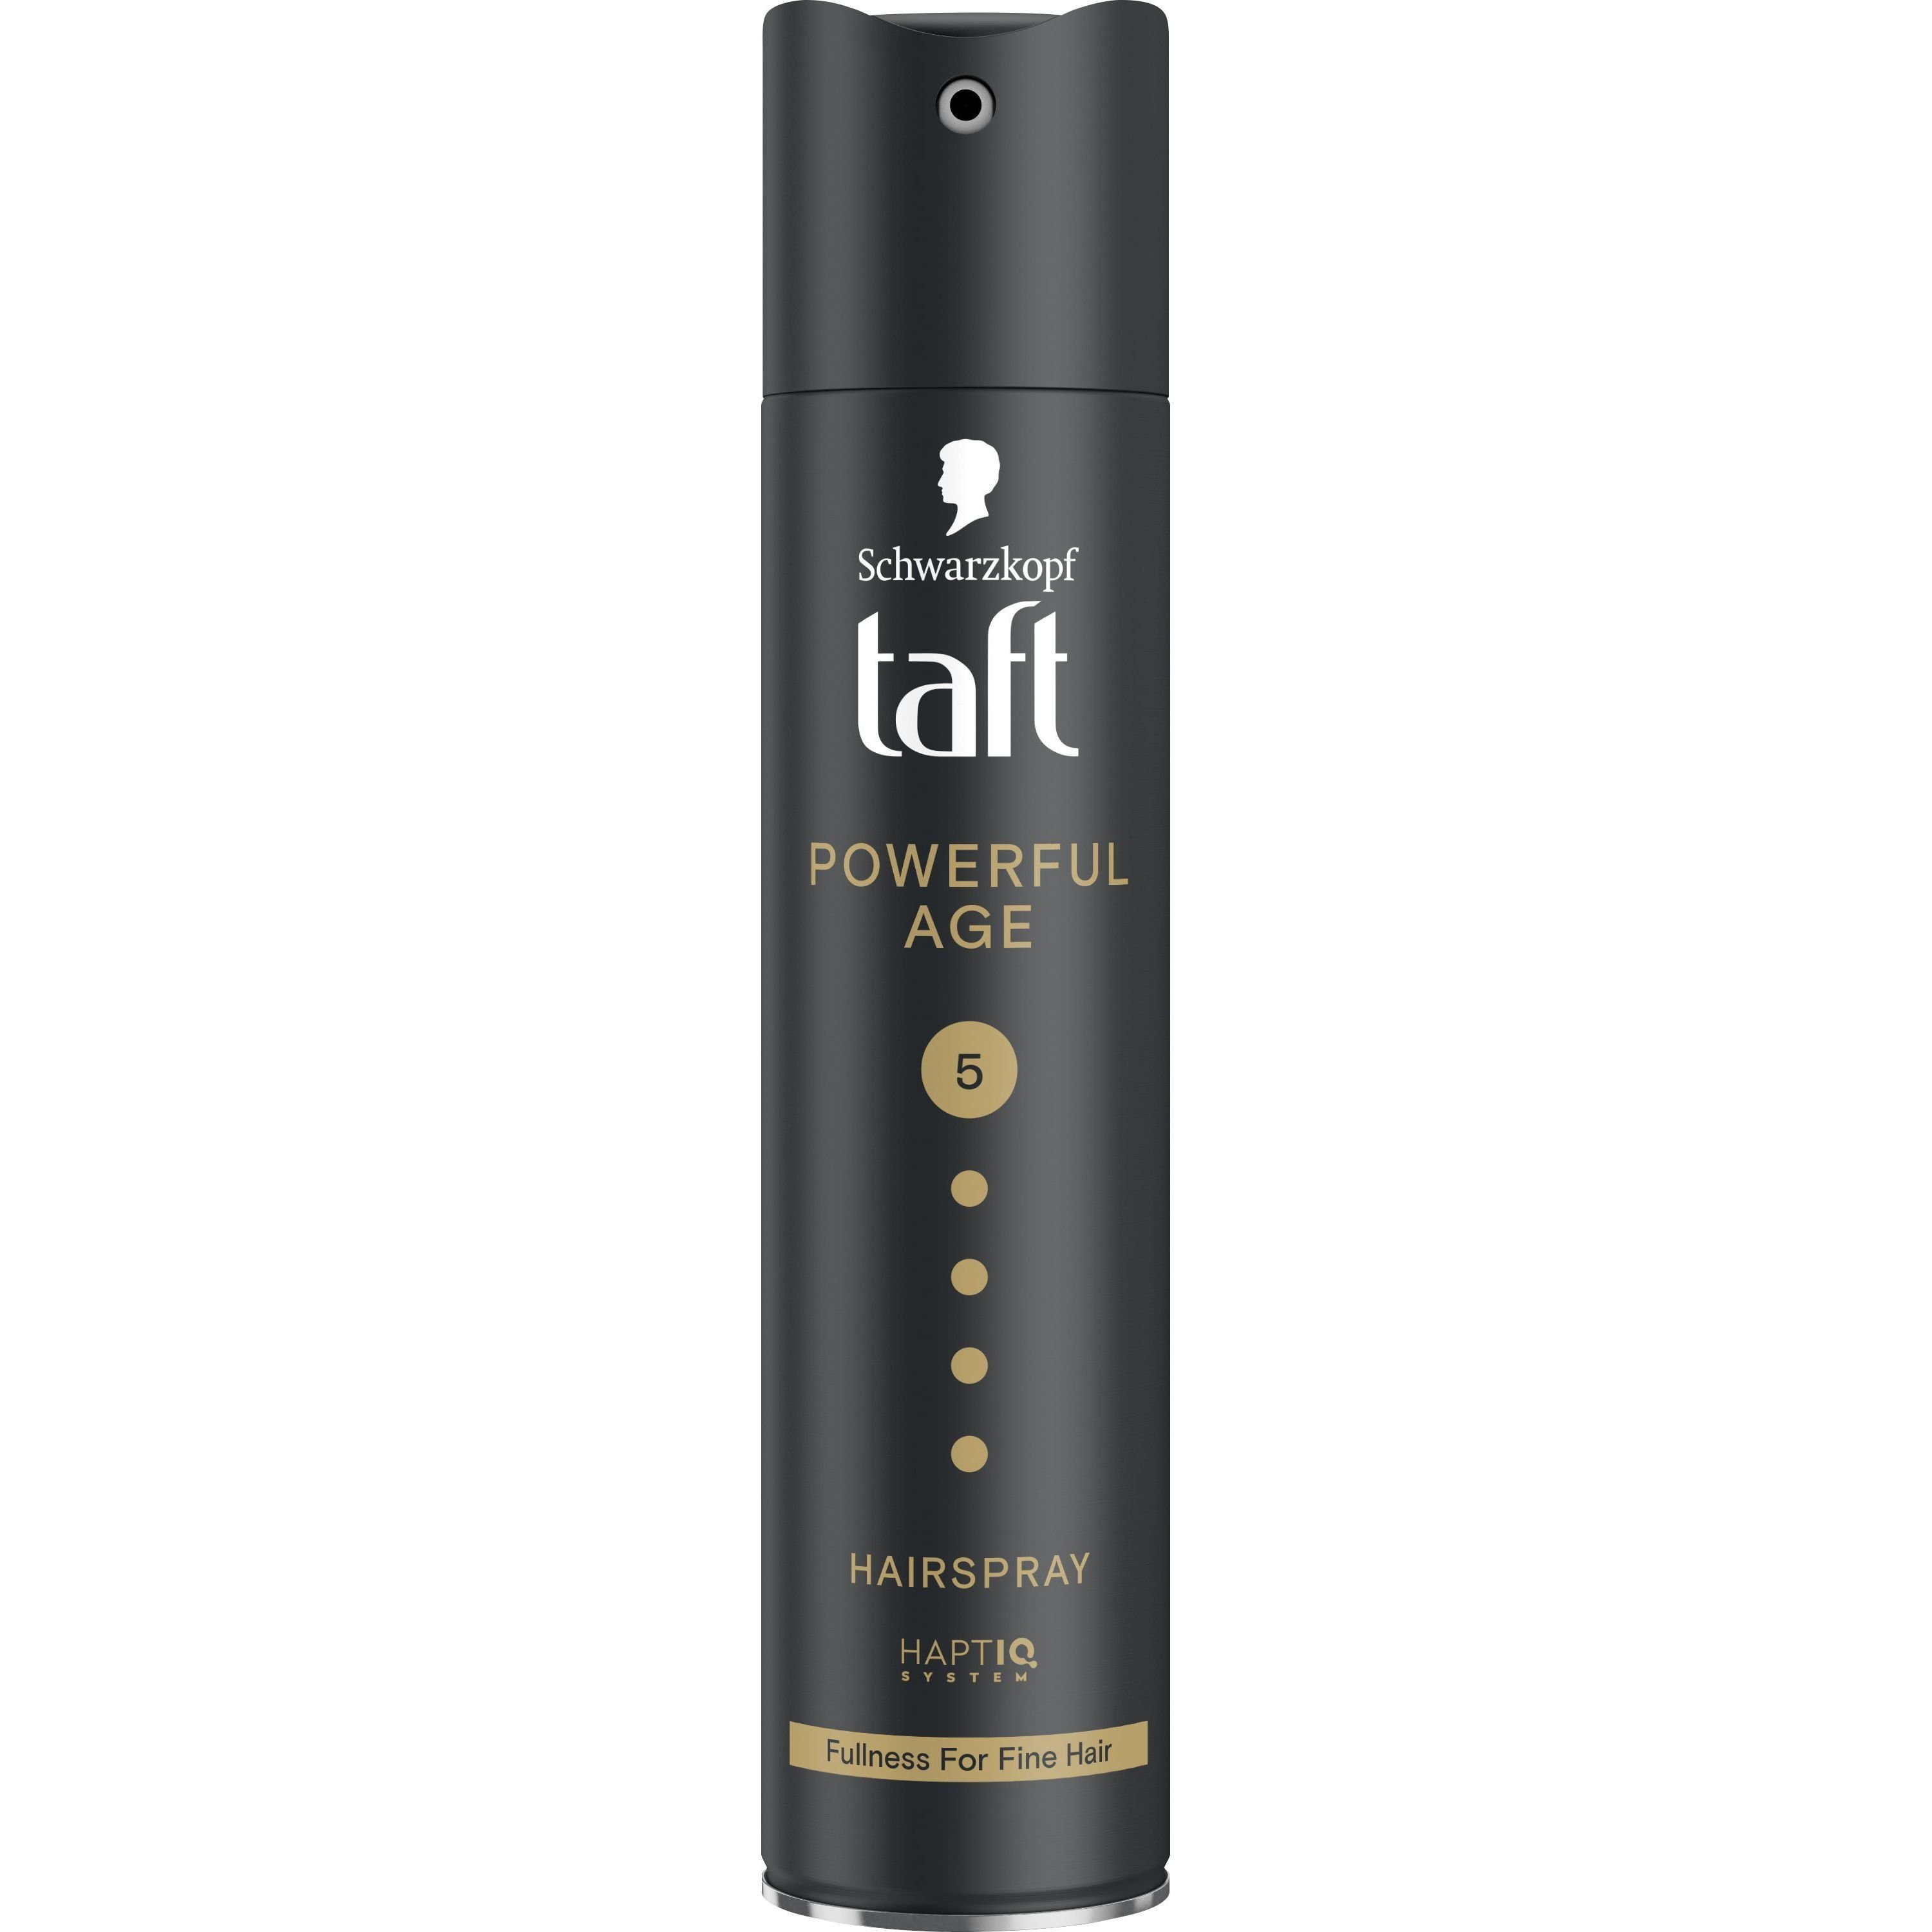 Лак Taft Powerful Age 5 для тонкого й ослабленого волосся 250 мл - фото 1